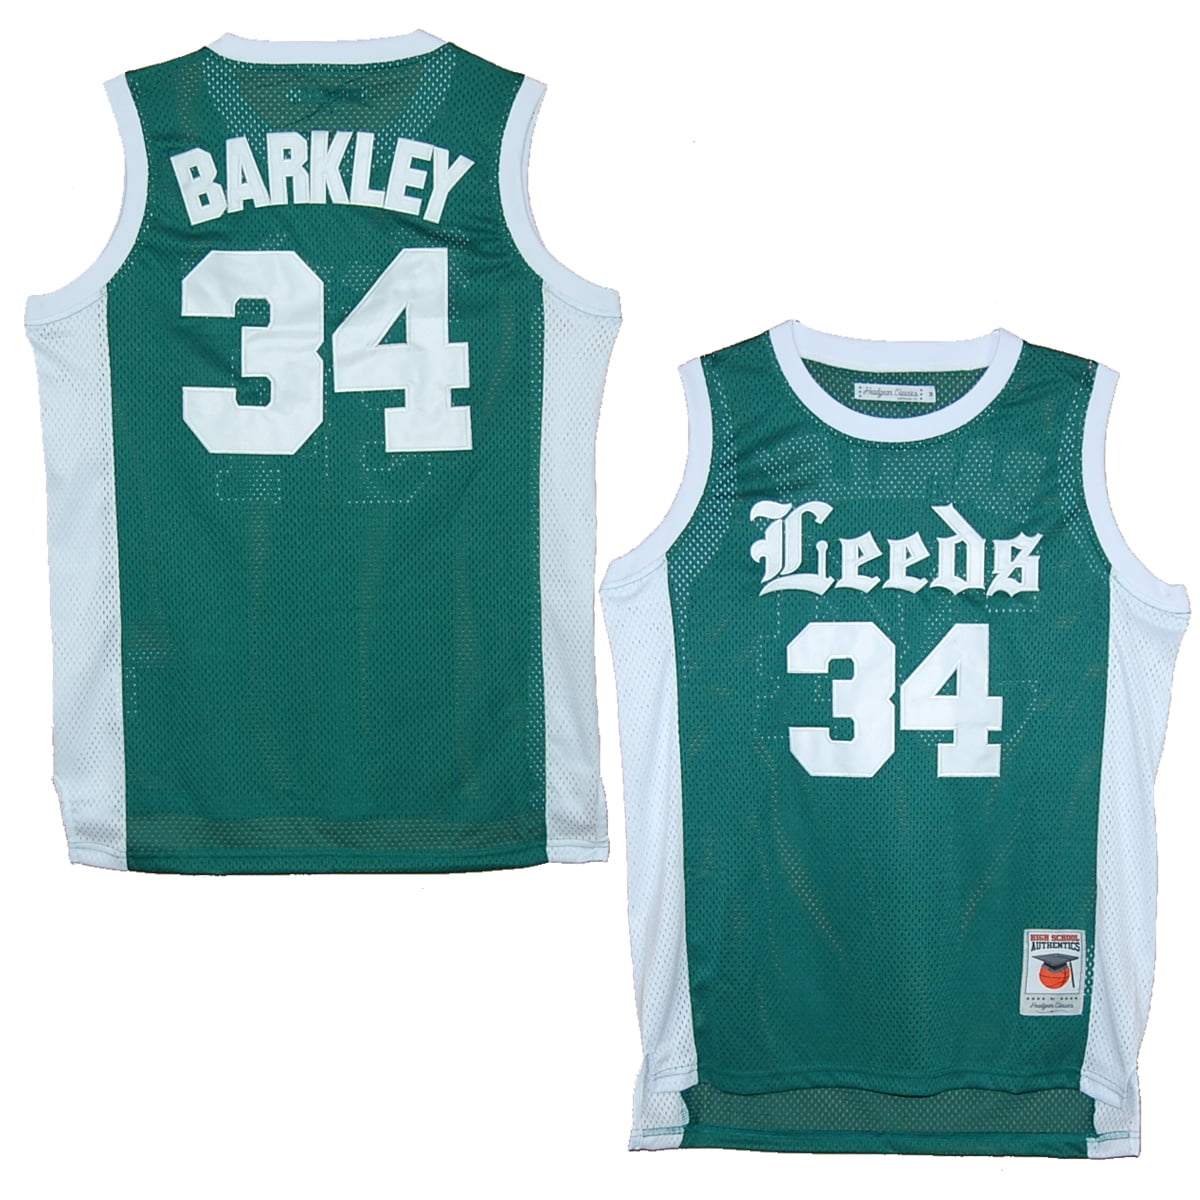 charles barkley 34 jersey